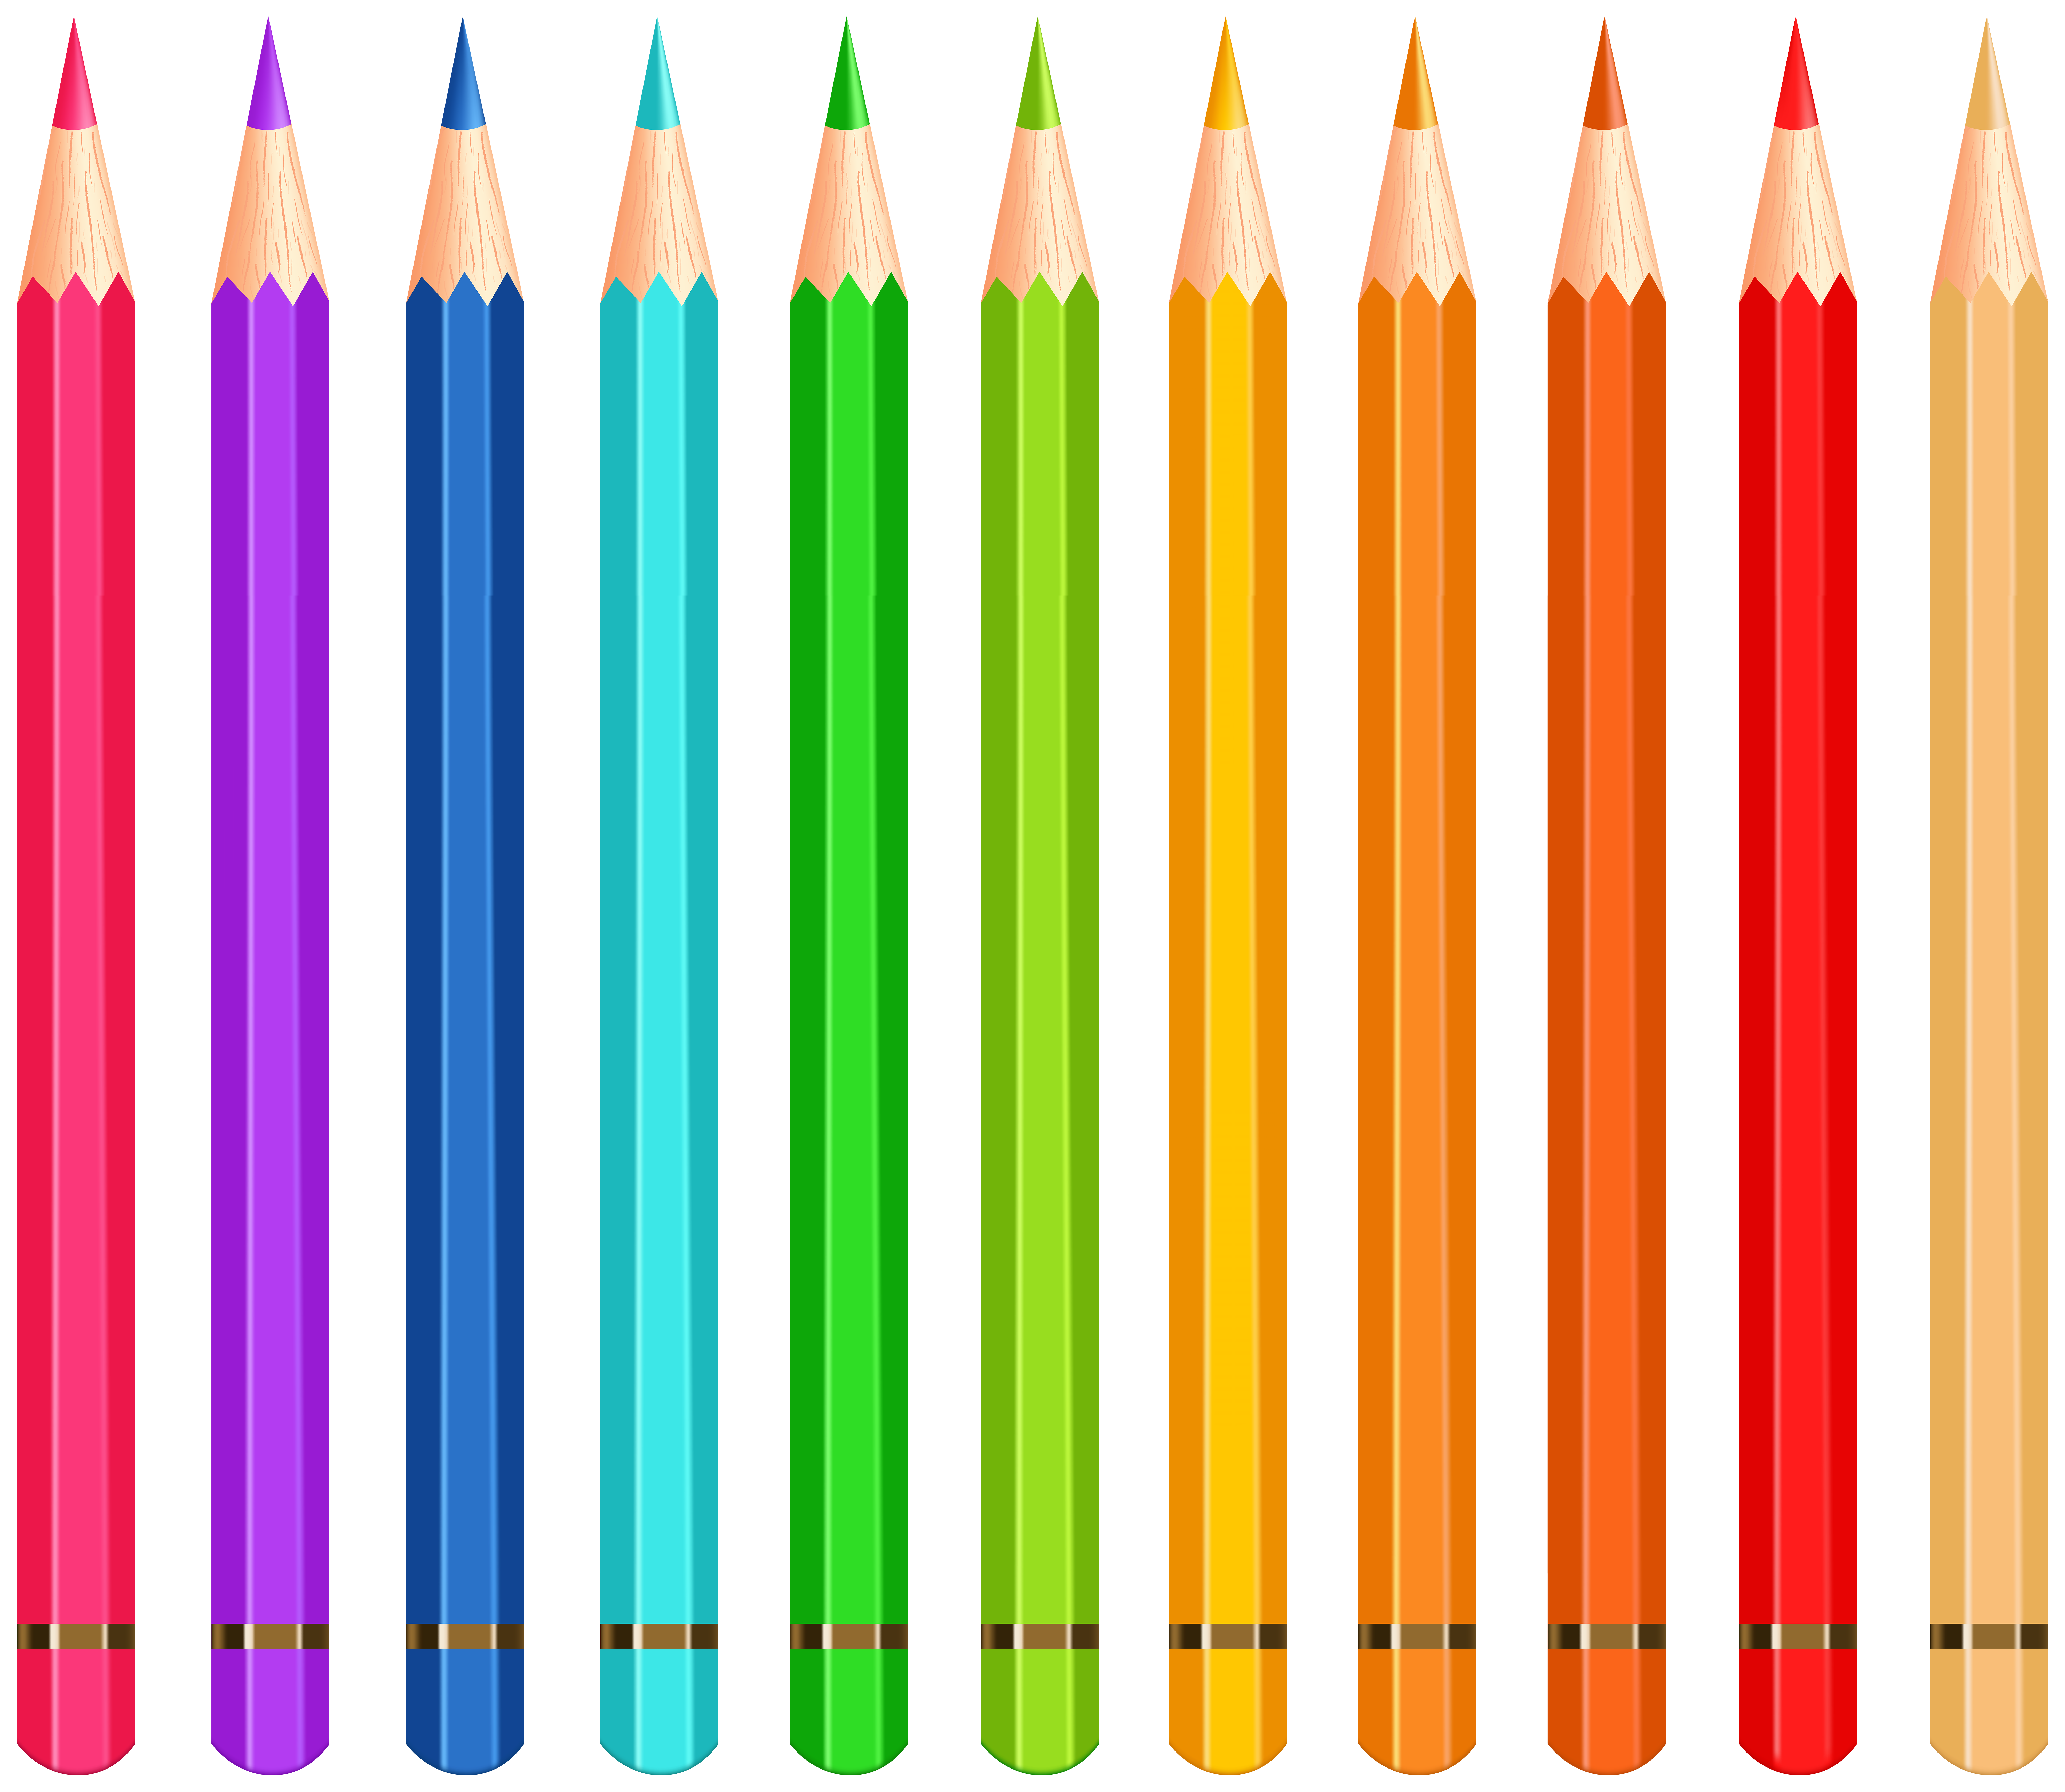 Изображения карандашей. Карандаш. Карандаш для детей. Карандаши цветные. Цветные карандаши вектор.